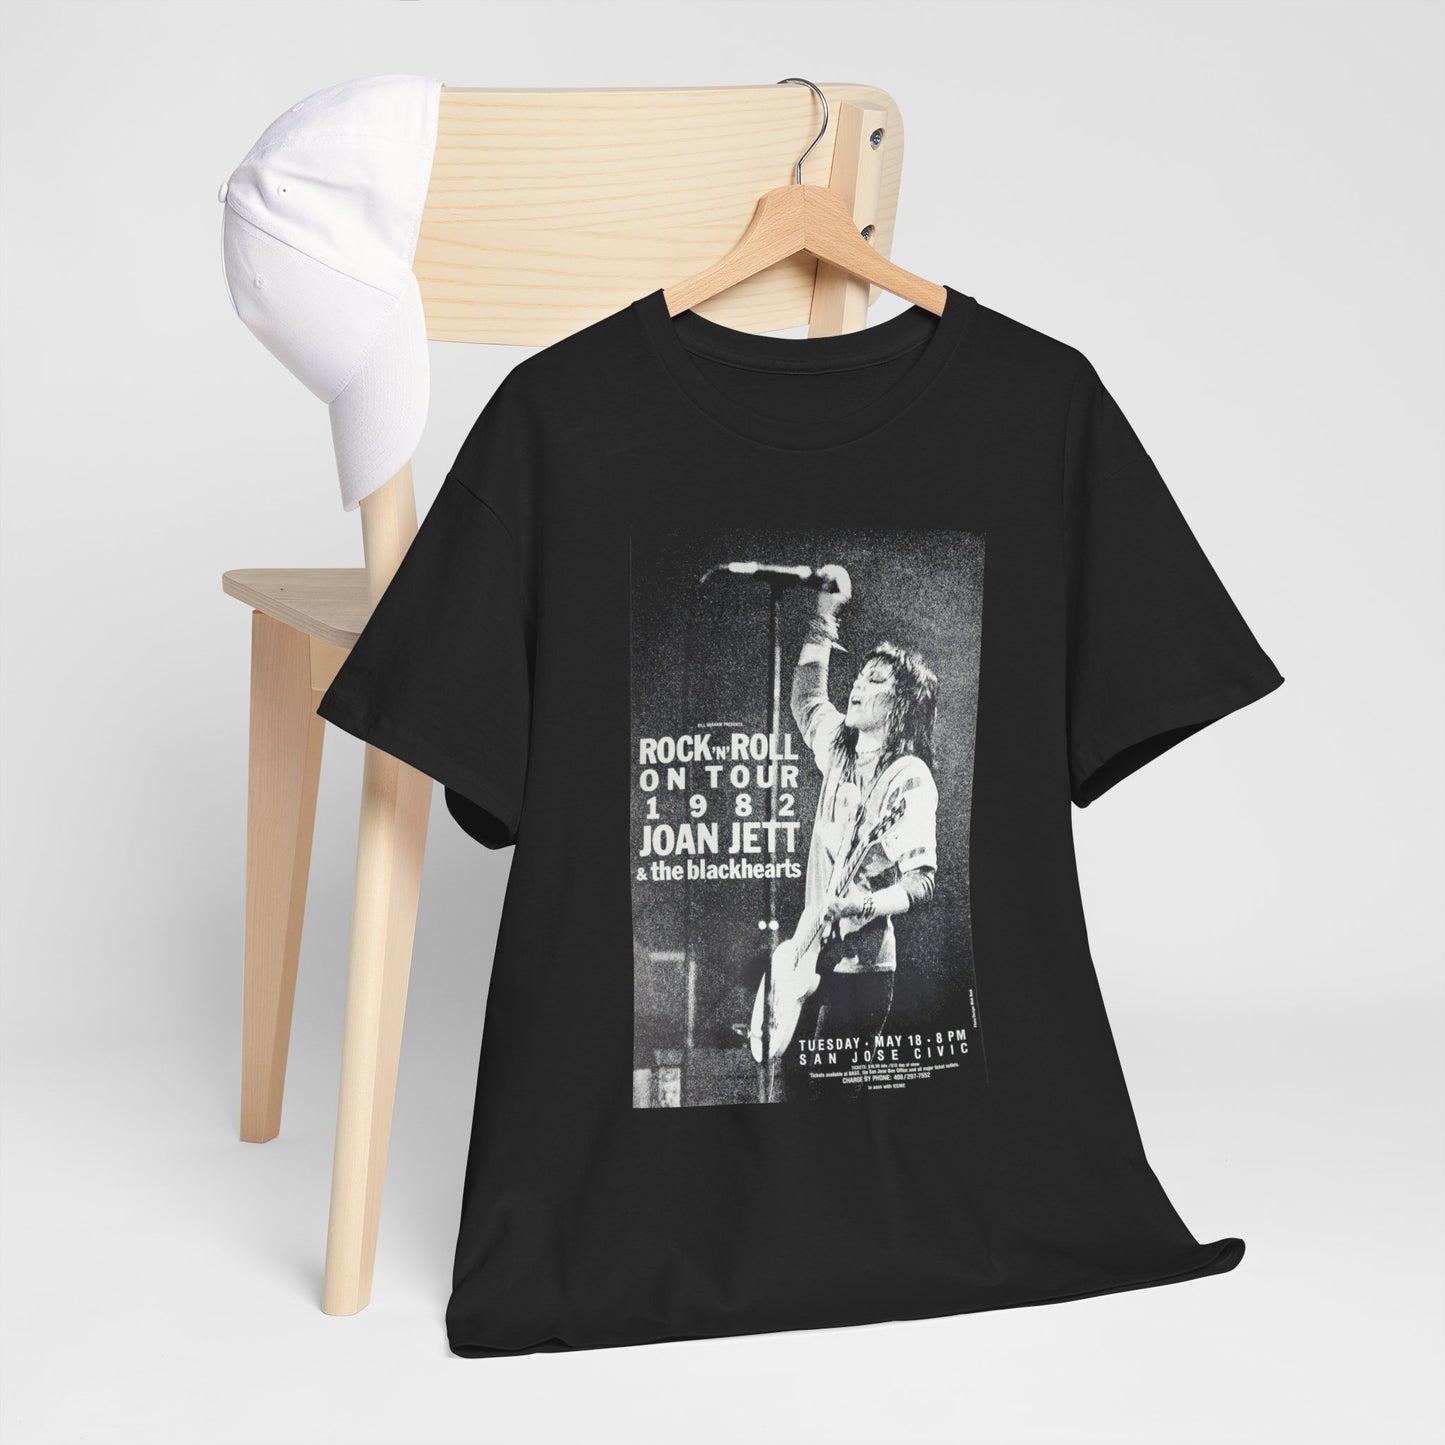 Concert Poster Tee #251: Joan Jett & The Blackhearts